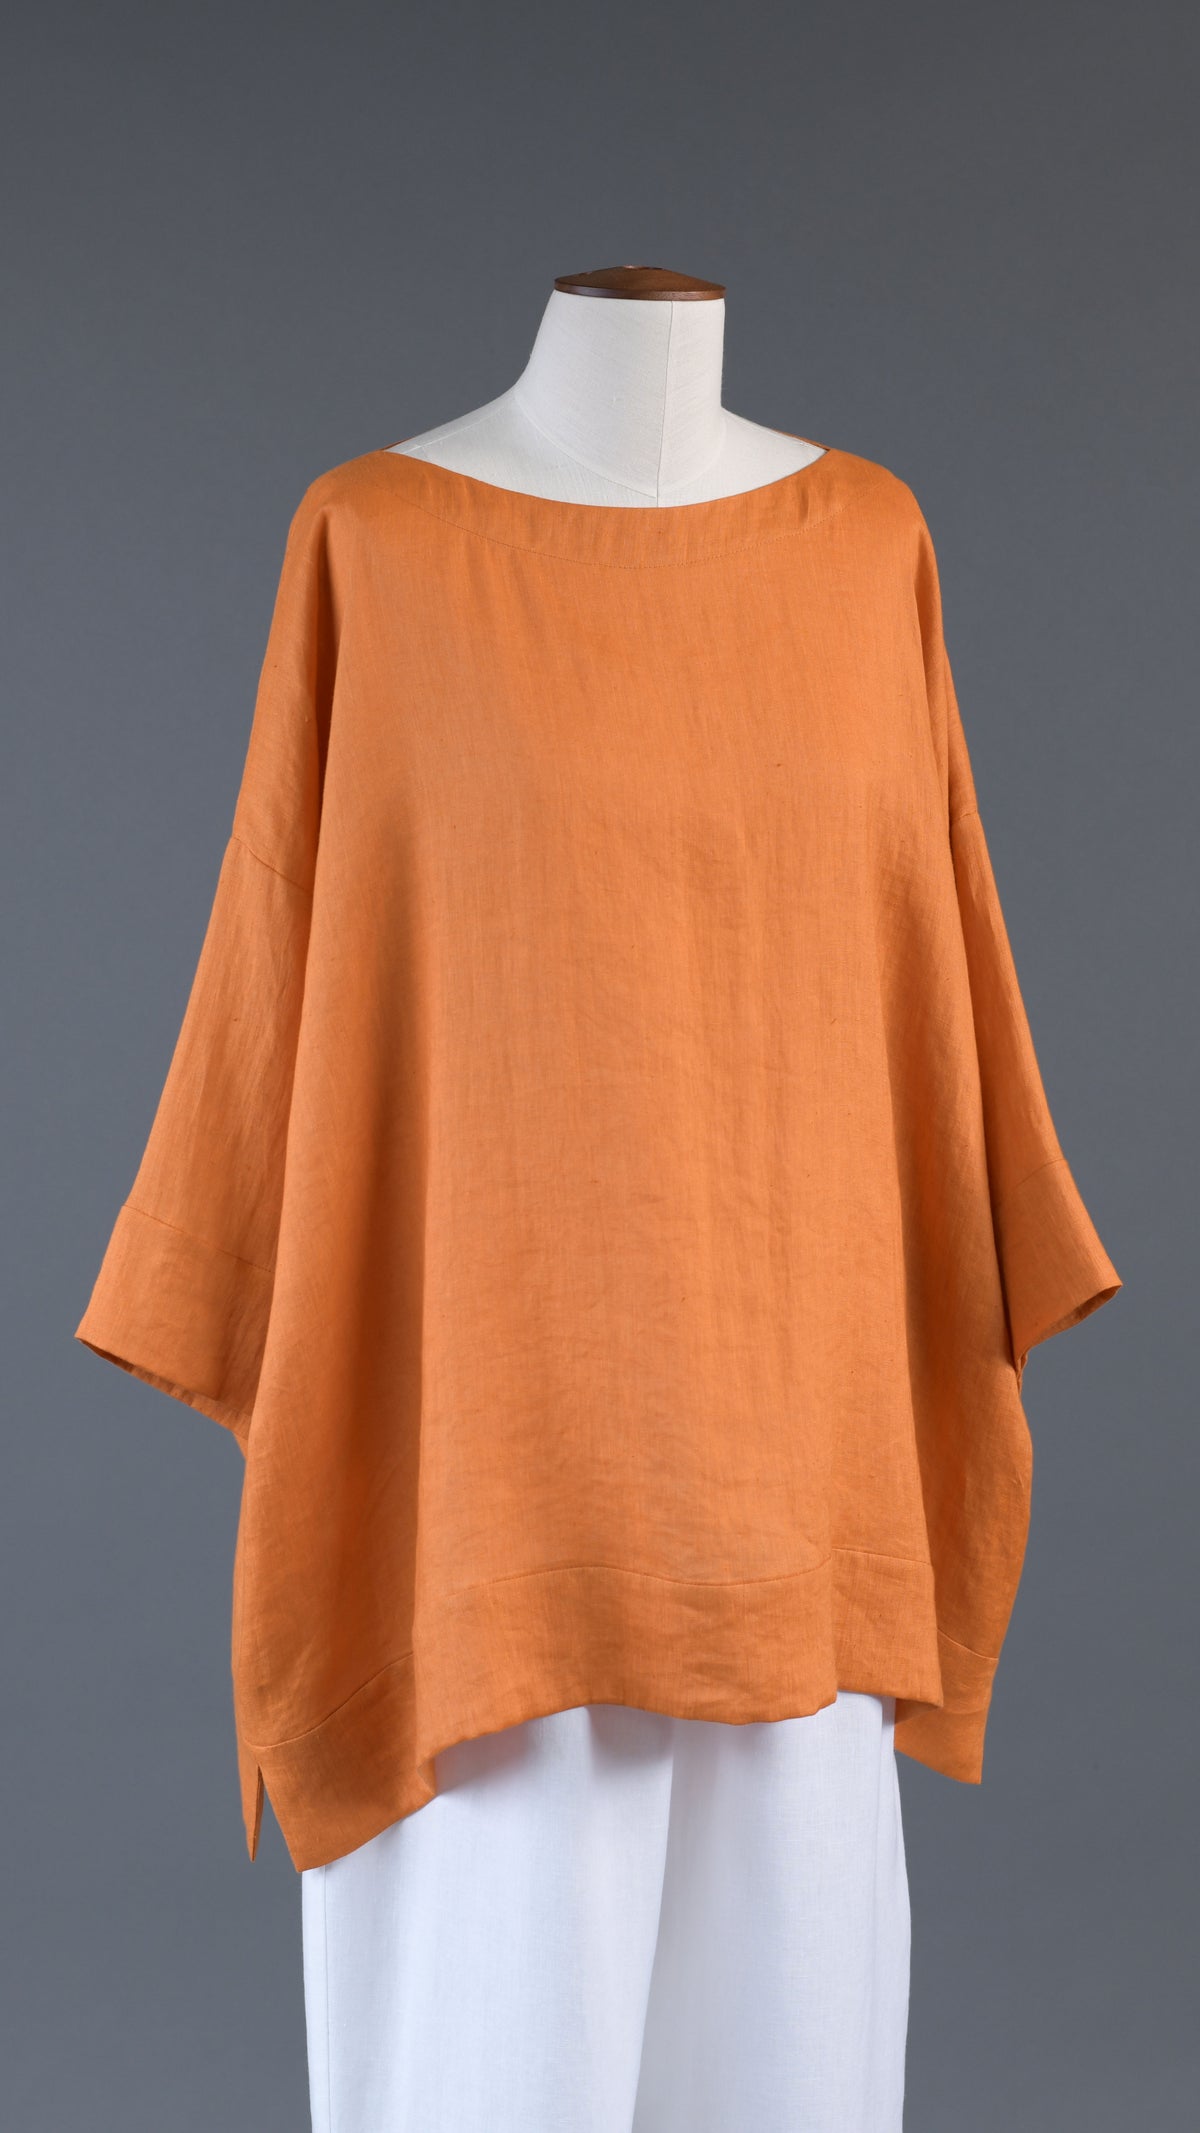 scoop neck 3/4 sleeve top with hem bands - long in amber orange